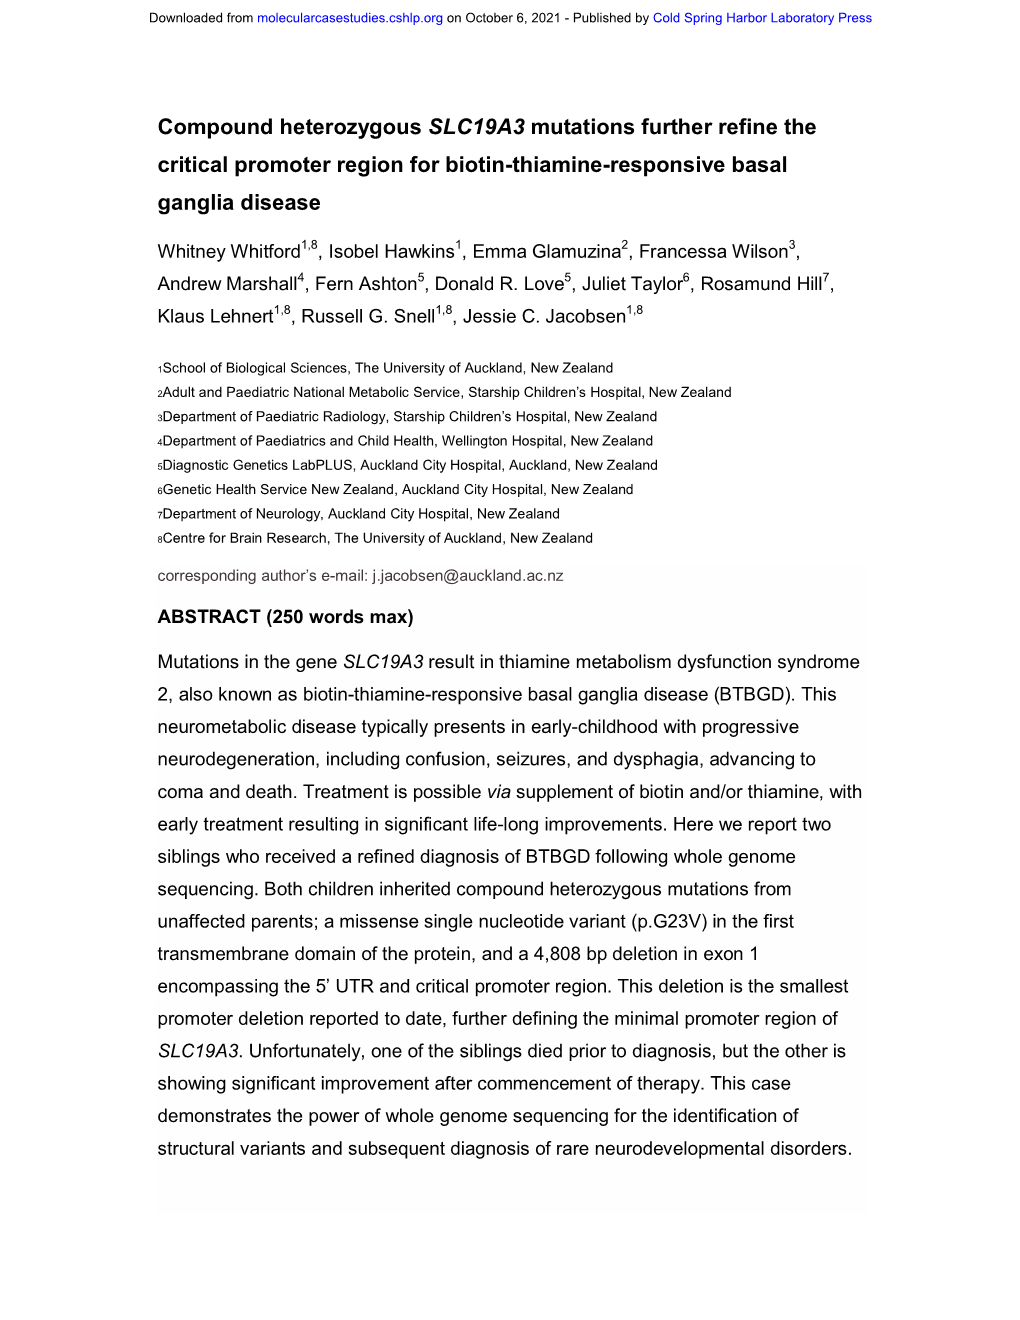 Compound Heterozygous SLC19A3 Mutations Further Refine the Critical Promoter Region for Biotin-Thiamine-Responsive Basal Ganglia Disease